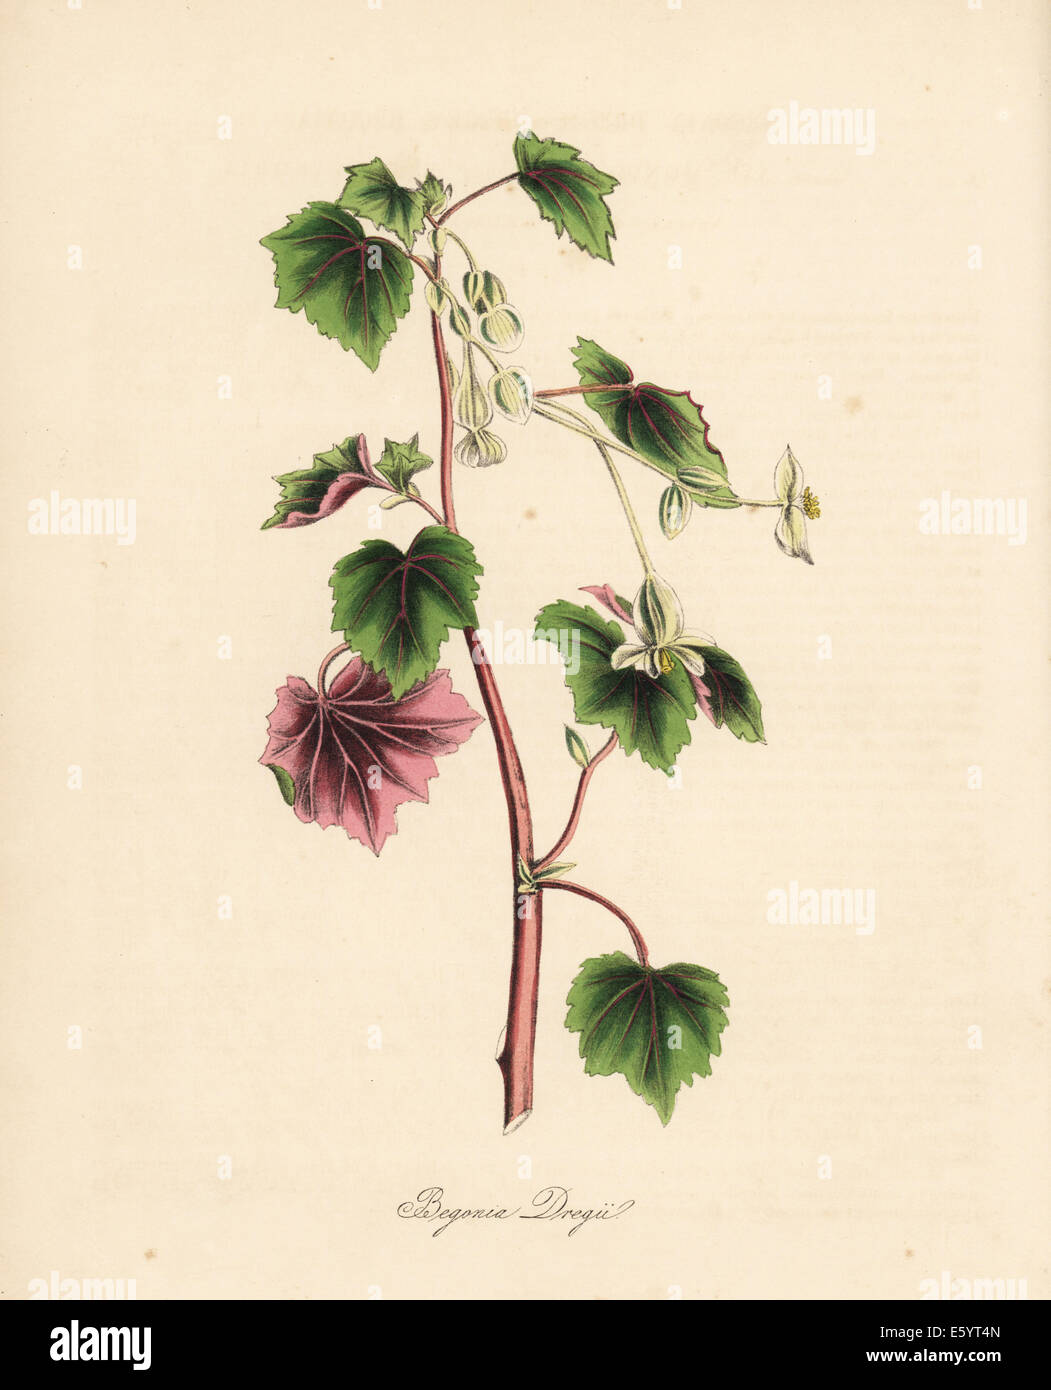 Dwarf wild begonia, Begonia dregei. Stock Photo